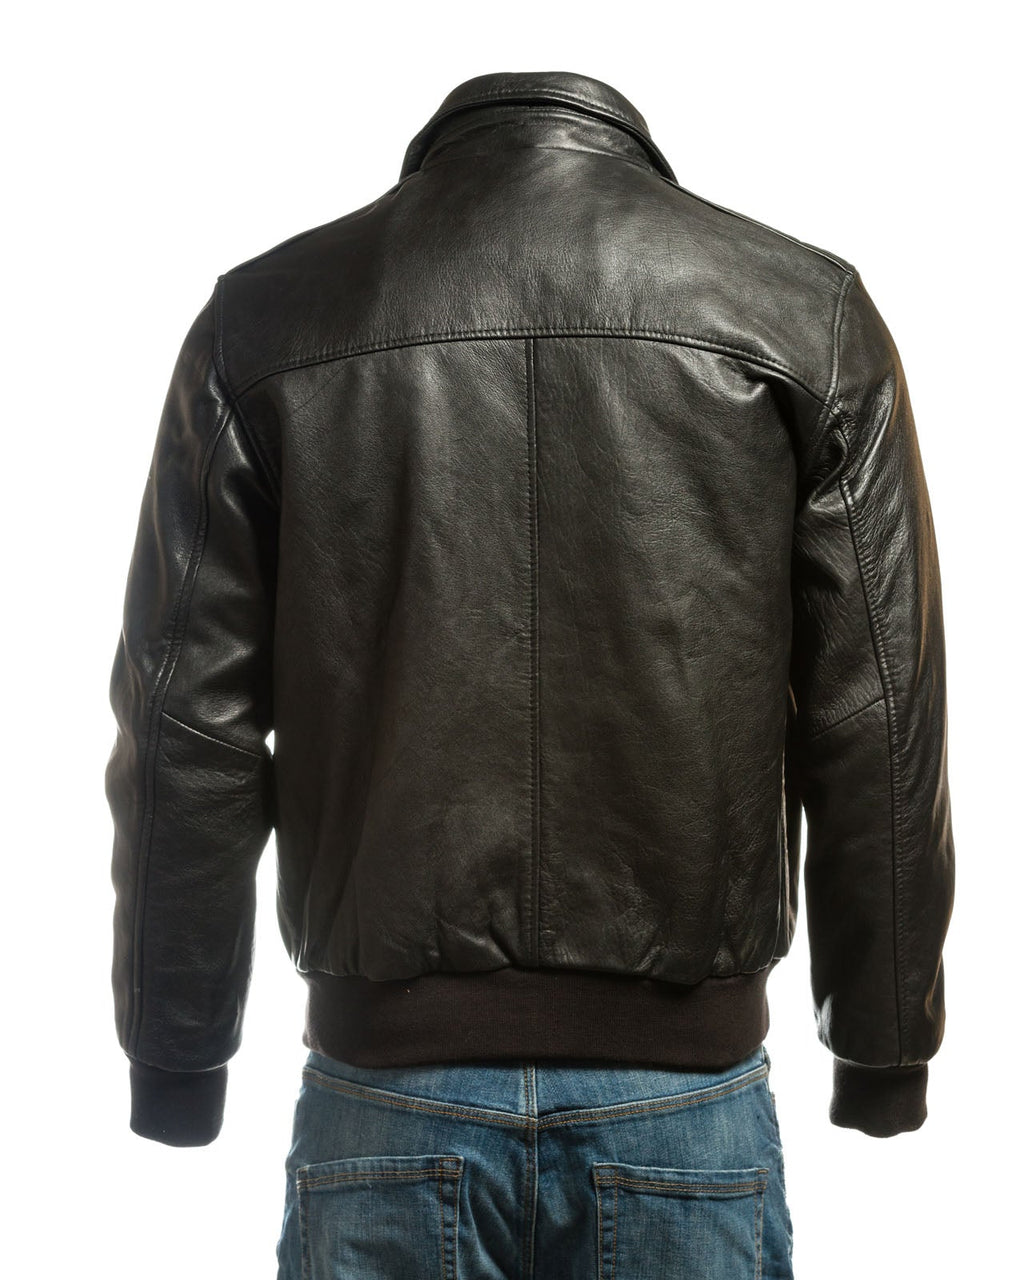 Men's Black Aviator Pilot Flight A2 Style Leather Jacket with Detachable Real Sheepskin Collar: Maurizio